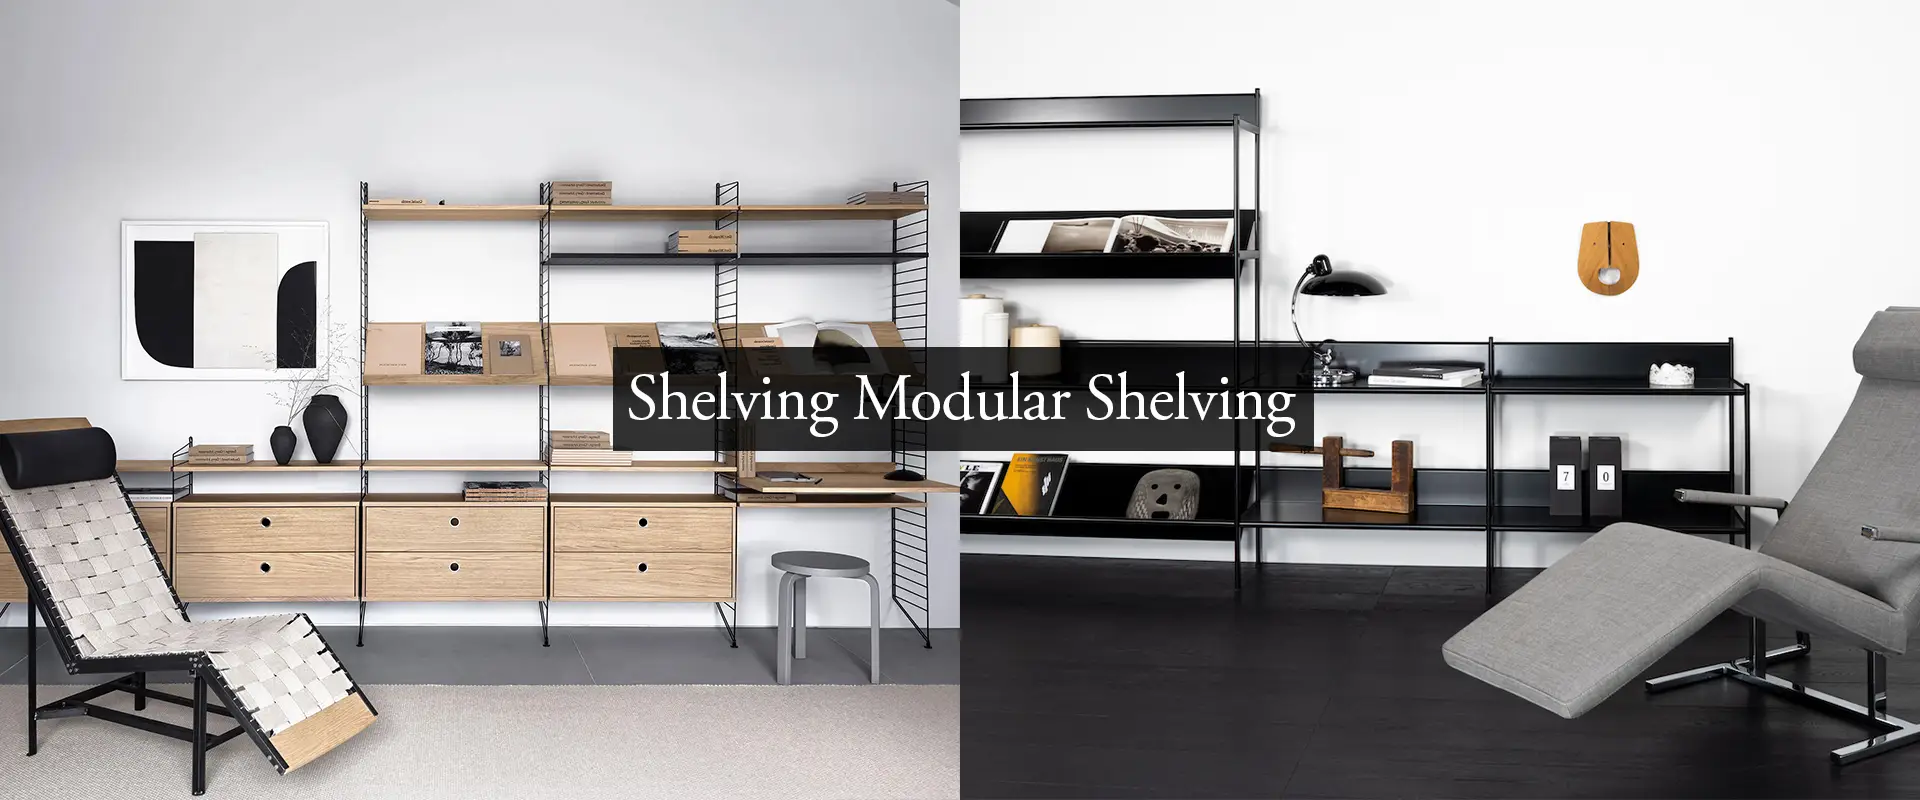 Shelving Modular Shelving